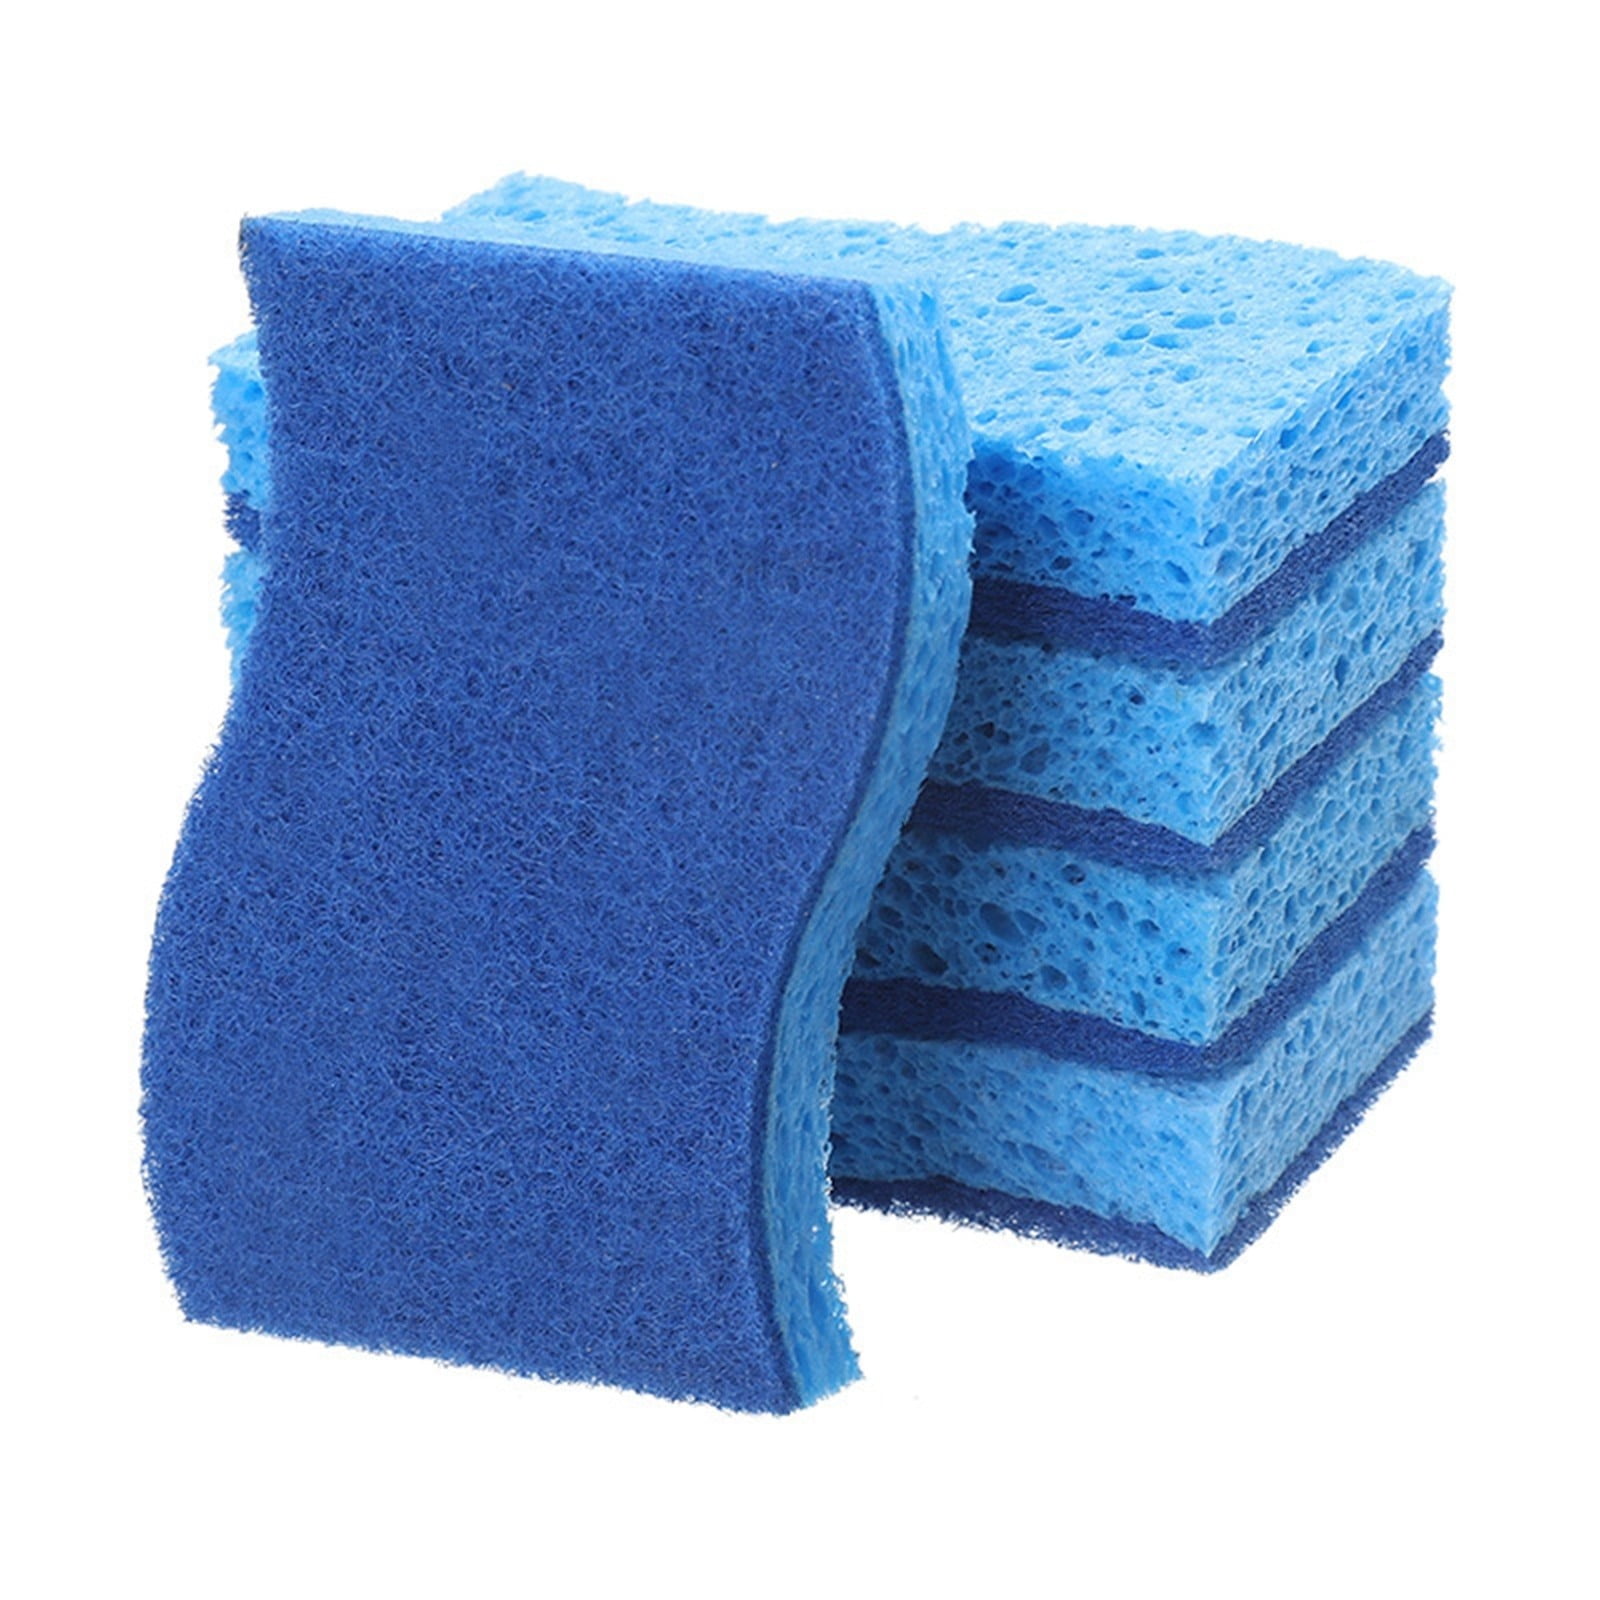 Kitchen Scrub Sponges - Non-Scratch Dishwashing Sponge for Cleaning ...